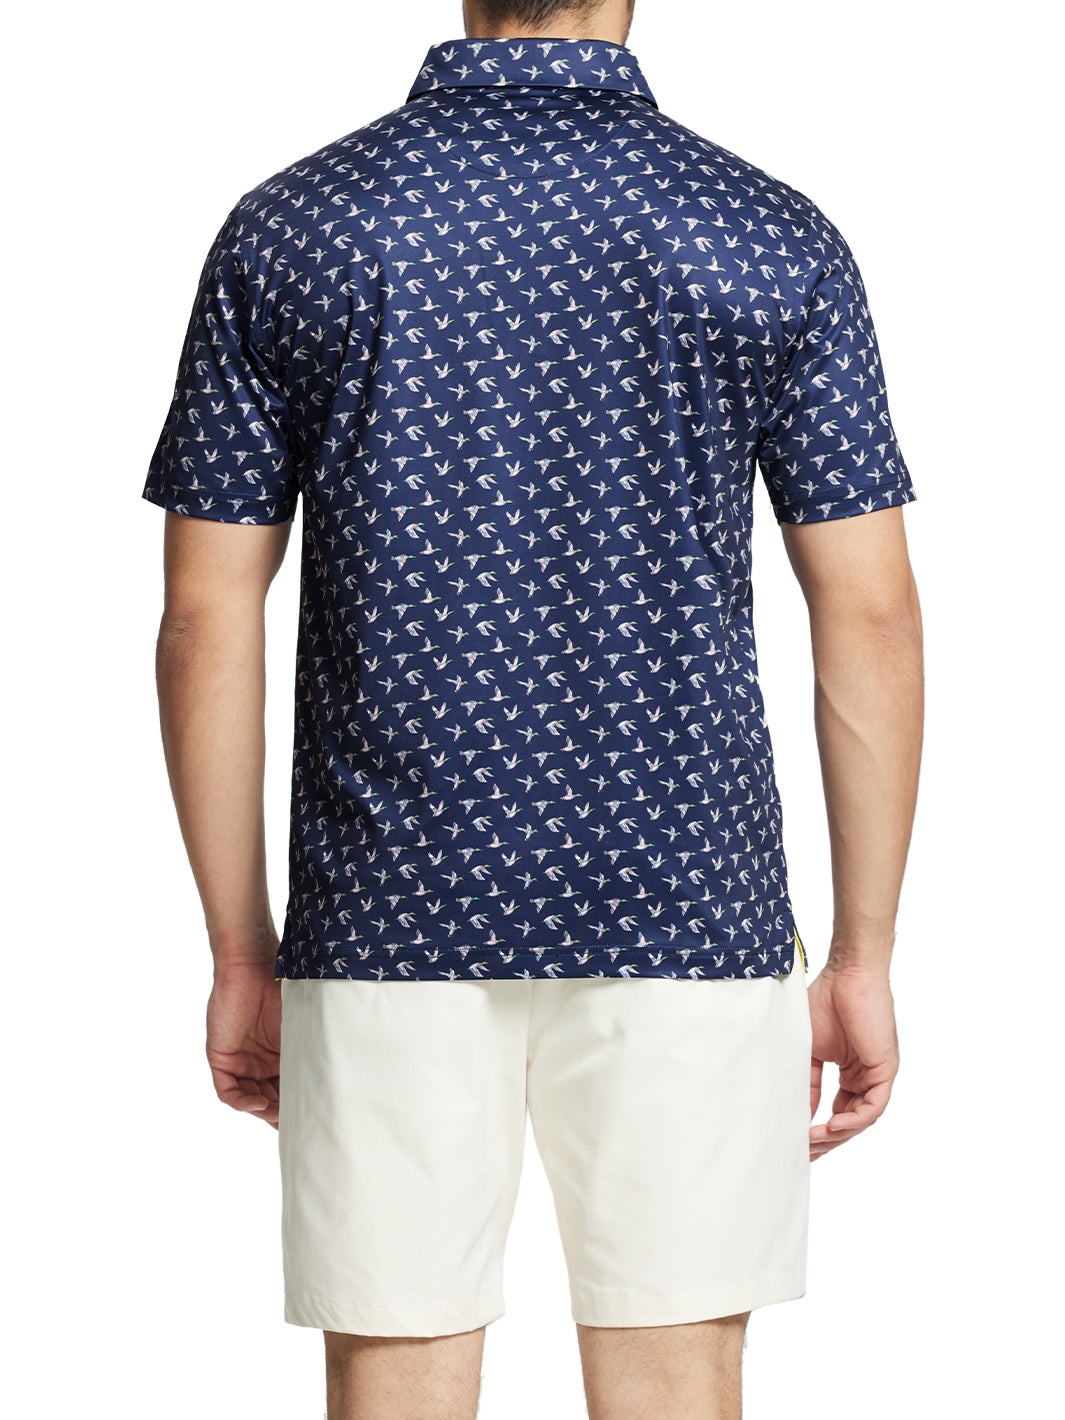 Men's Printed Golf Shirts-Waterfowl